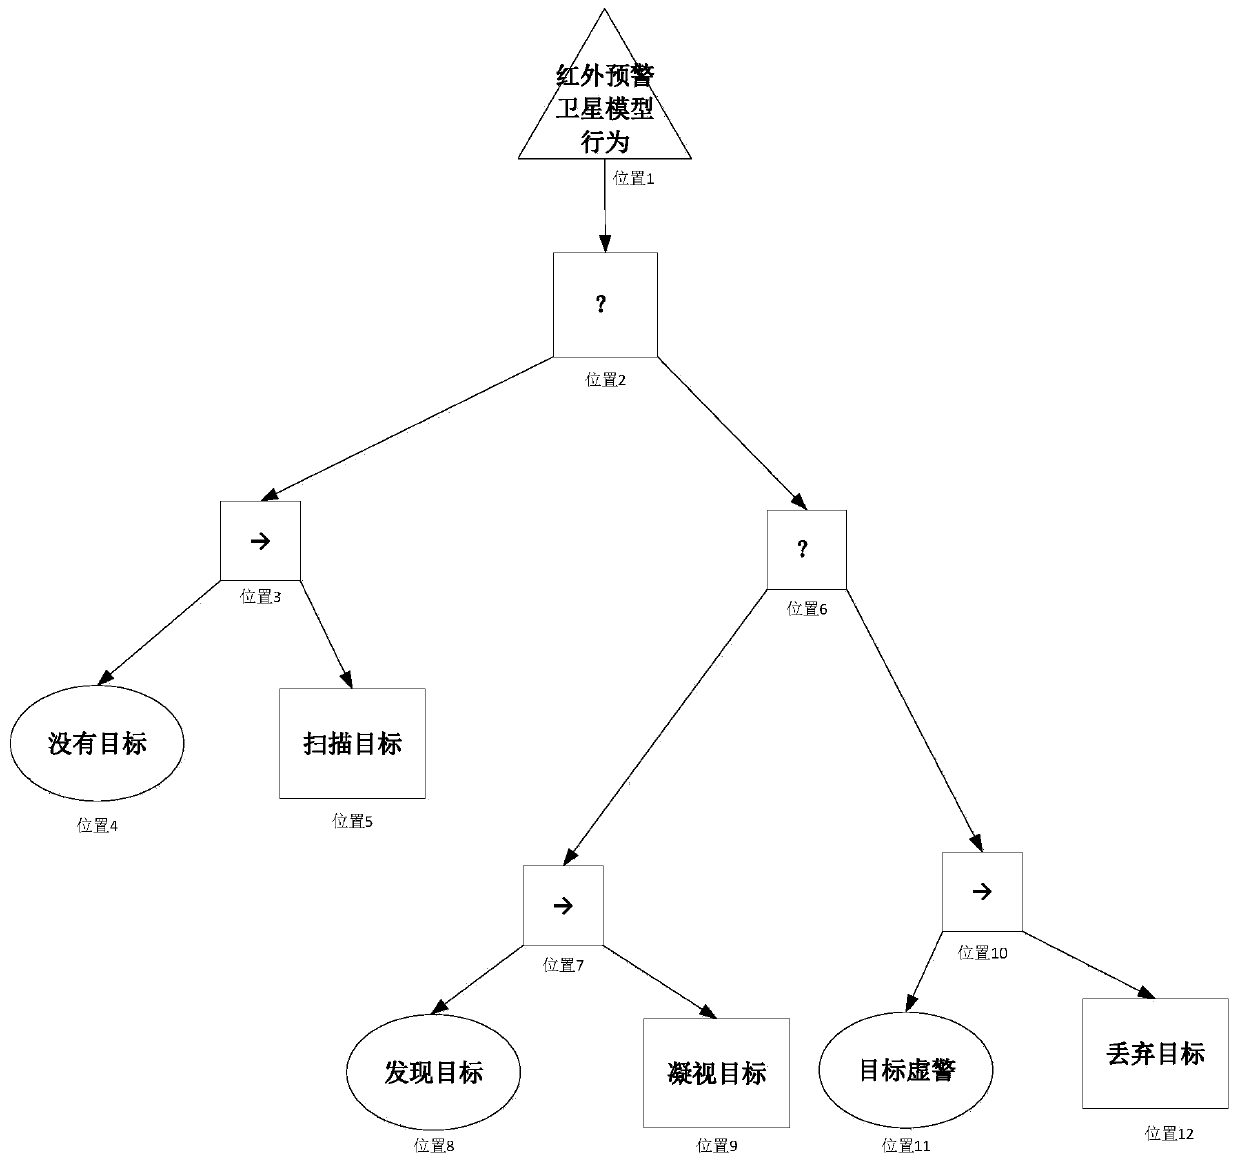 Distributed simulation platform based on behavior tree